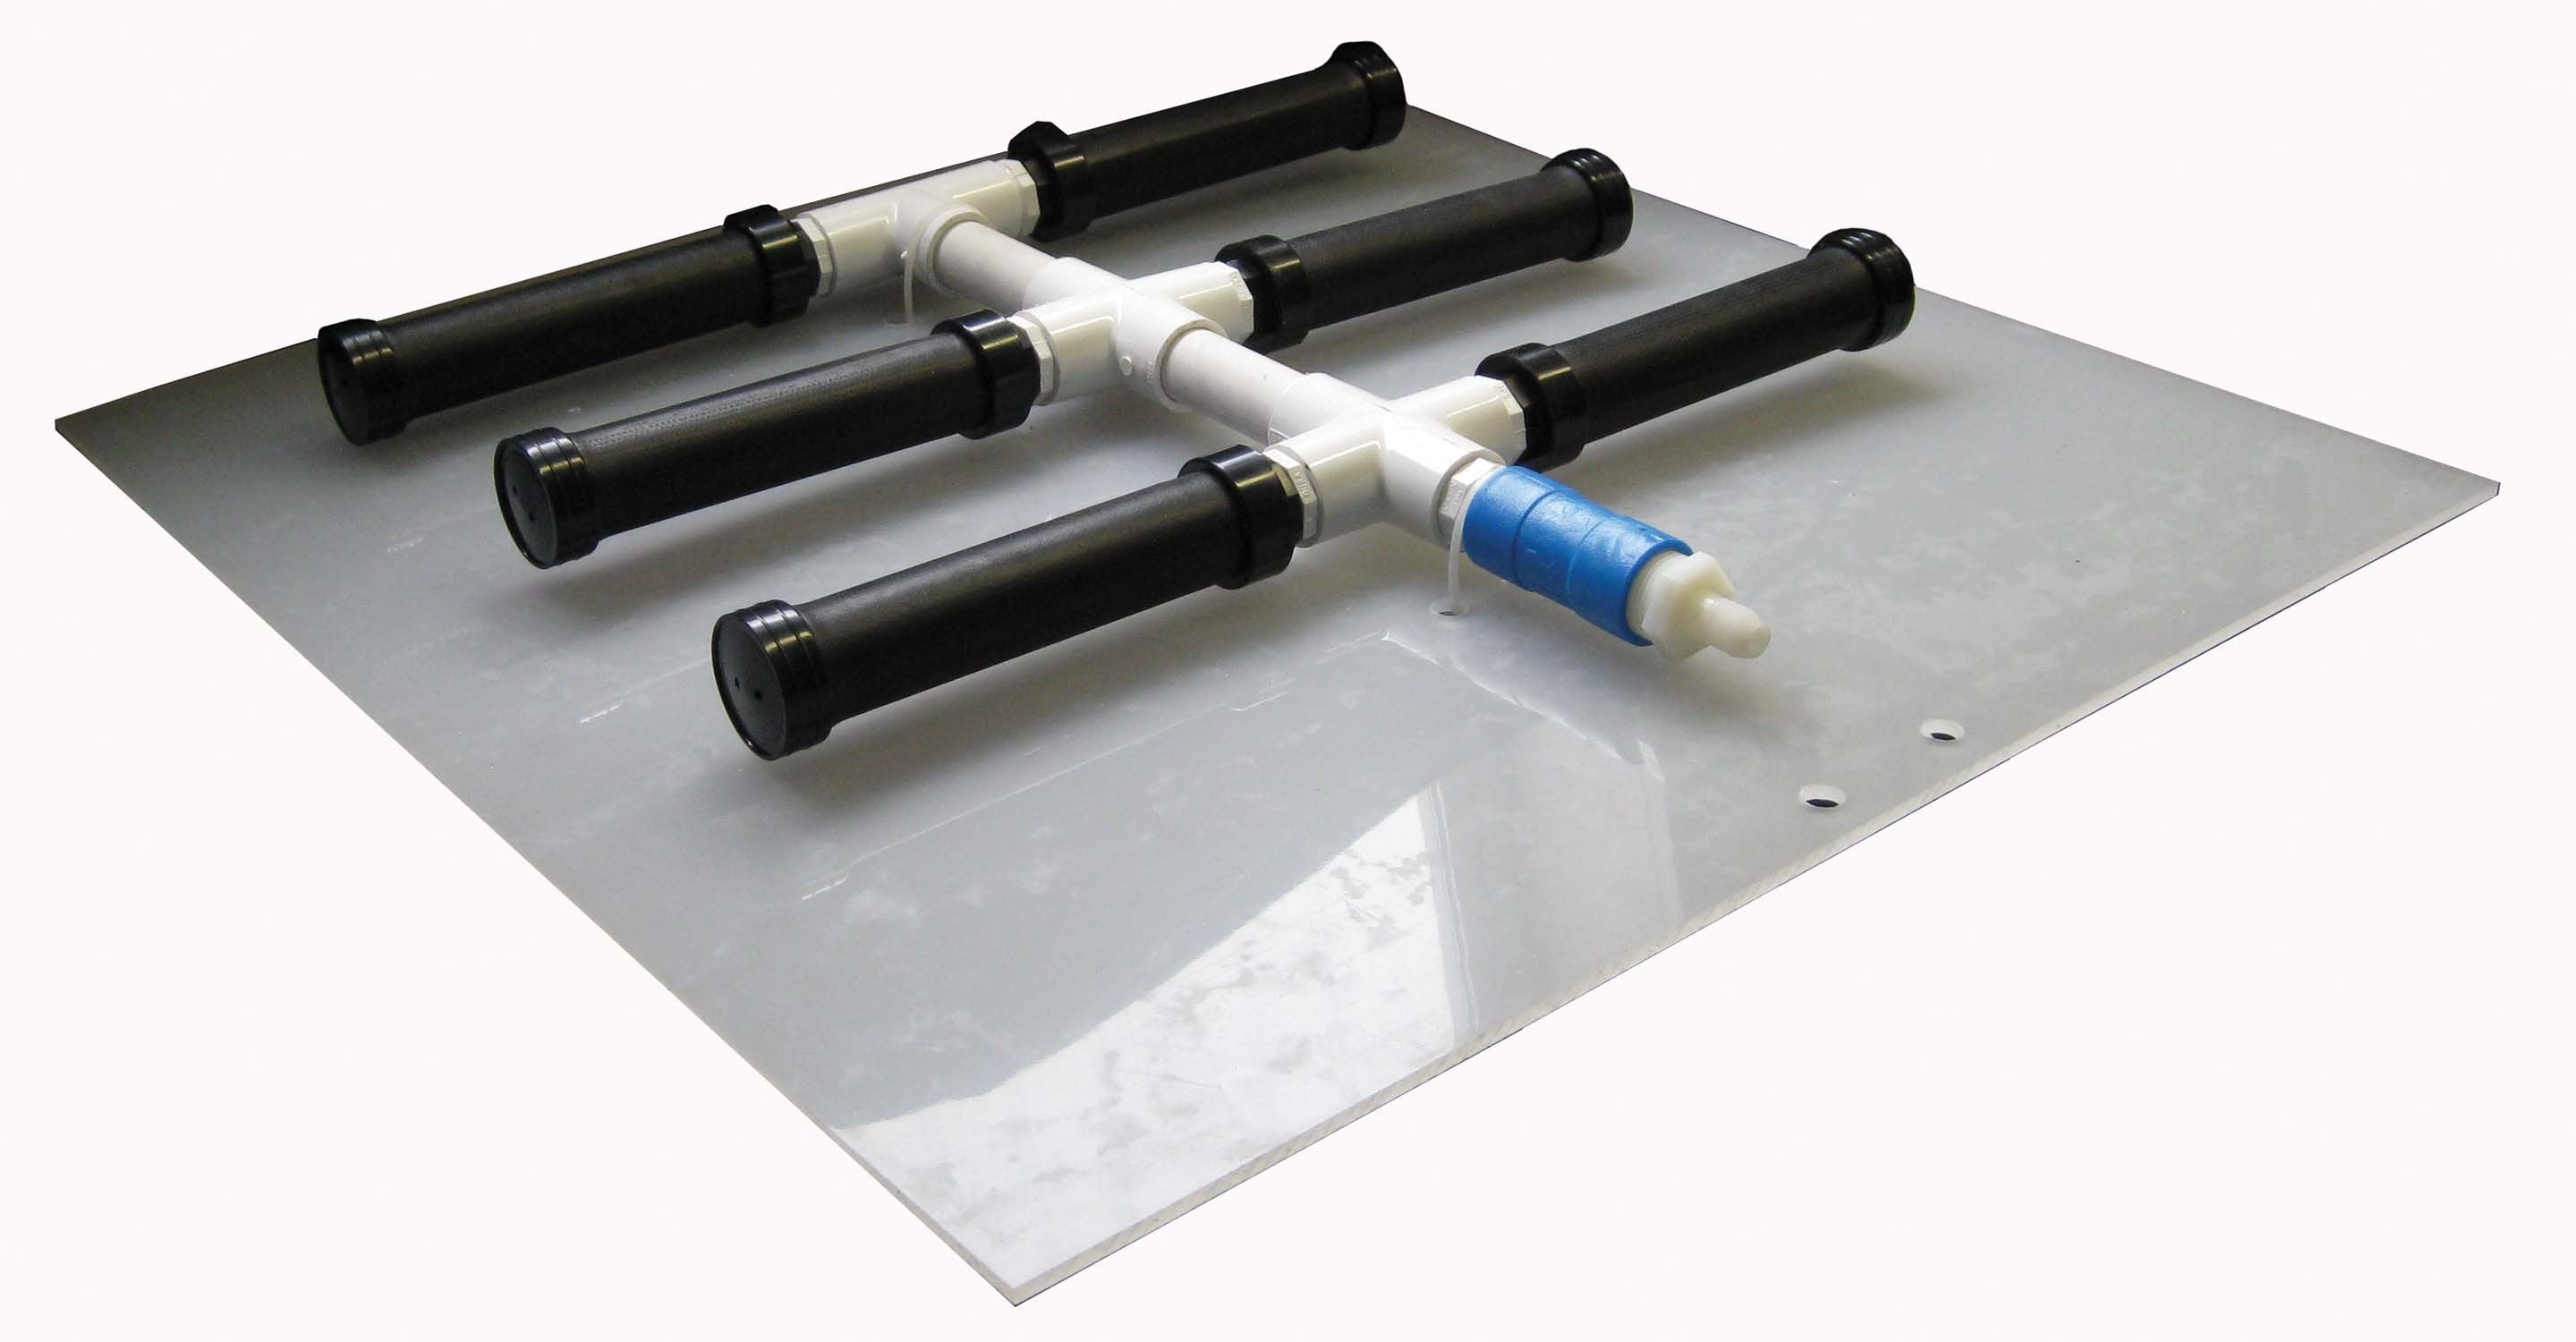 EasyPro DM Series Air Diffuser Manifolds with Polyethylene Underlay